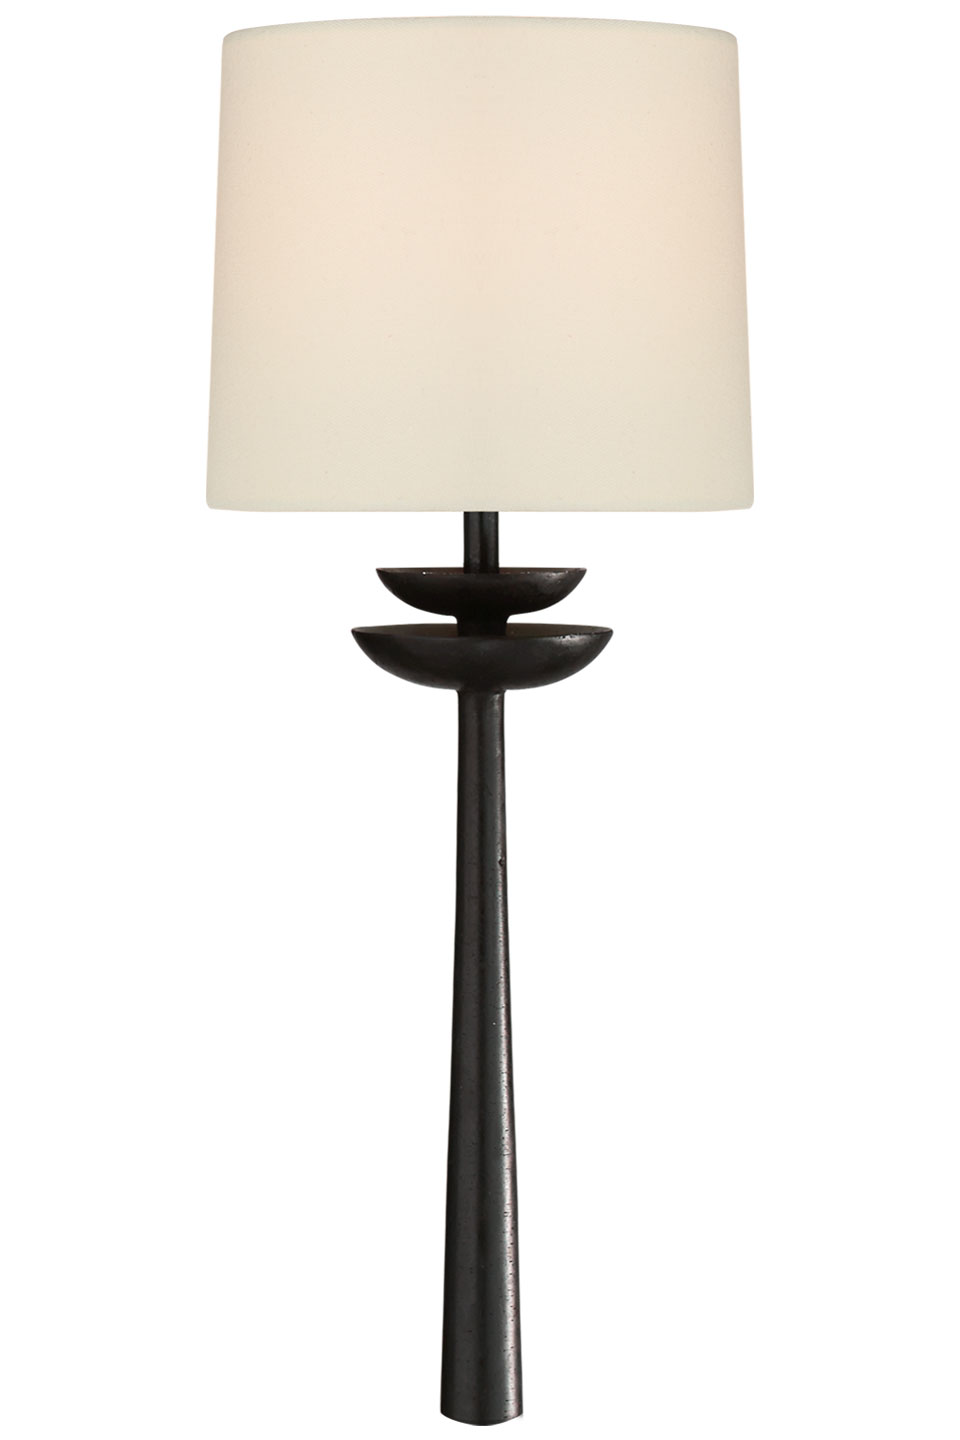 Beaumont black wall lamp  vegetal style. Visual Comfort&Co.. 